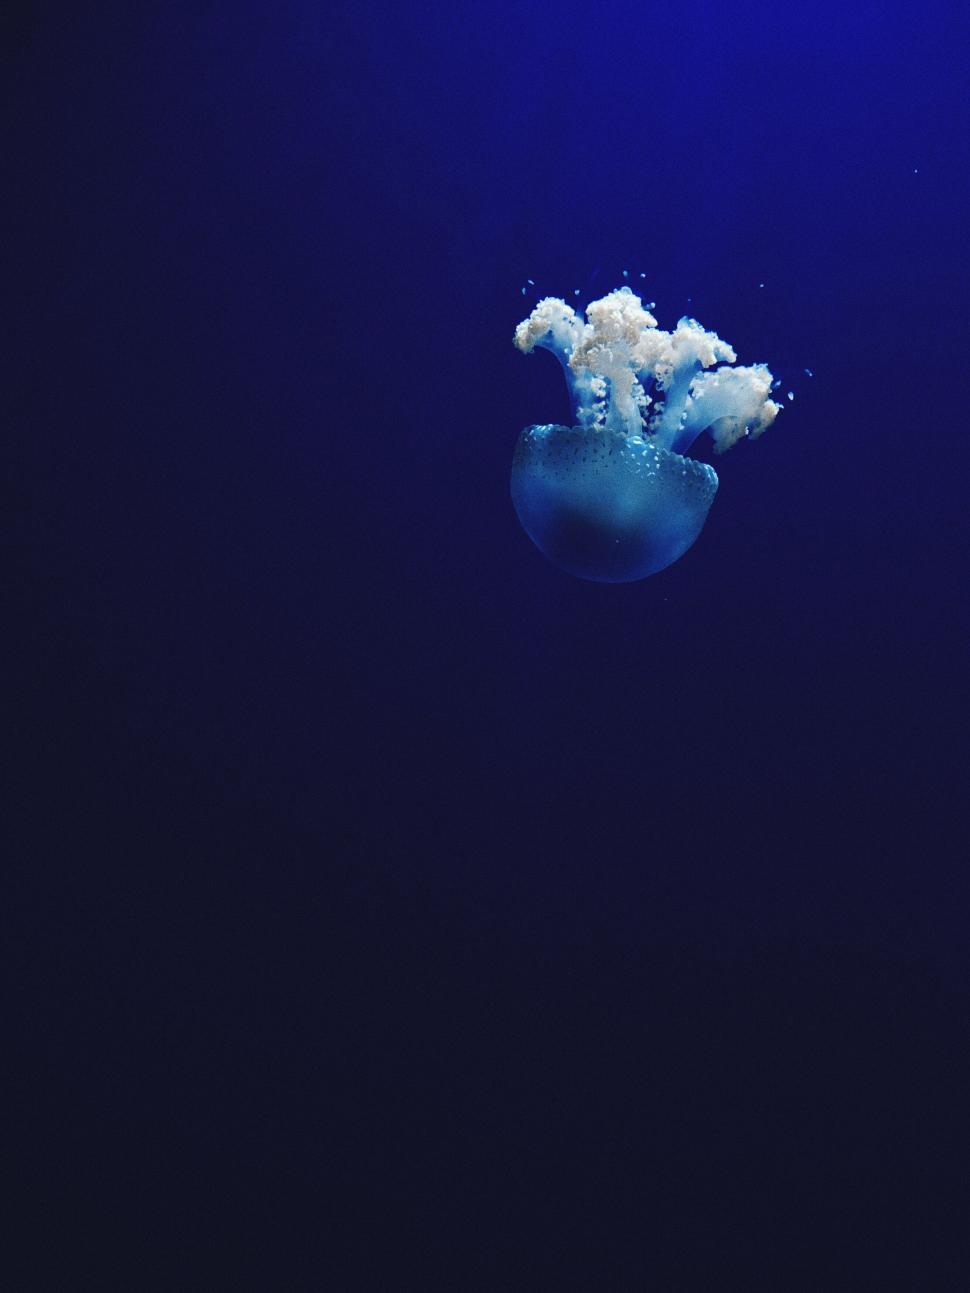 Free Image of Jellyfish floating in dark blue waters 